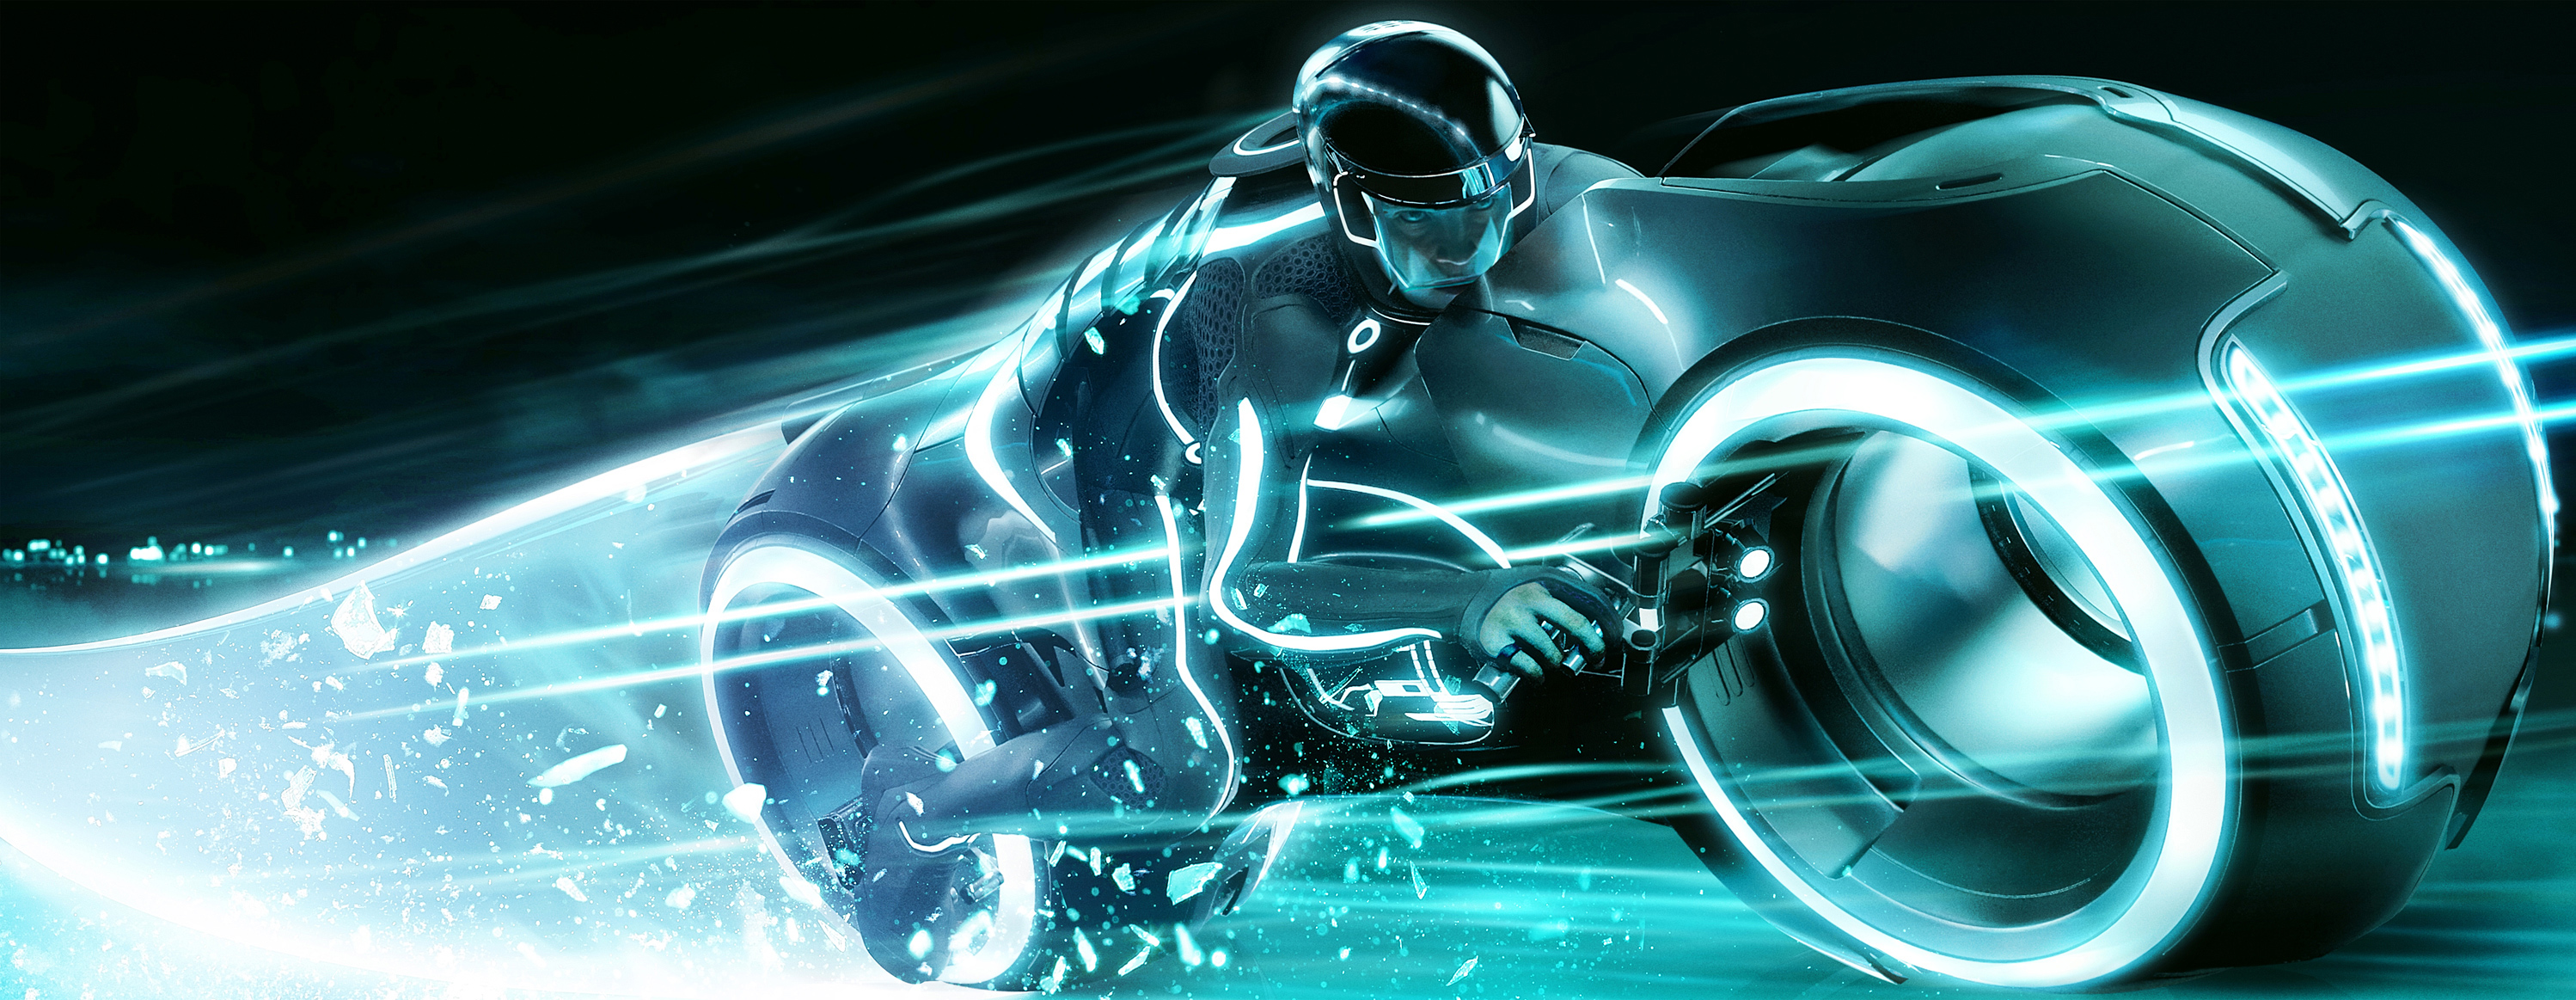 Speeding Light Cycle From Tron: Legacy Desktop Wallpaper